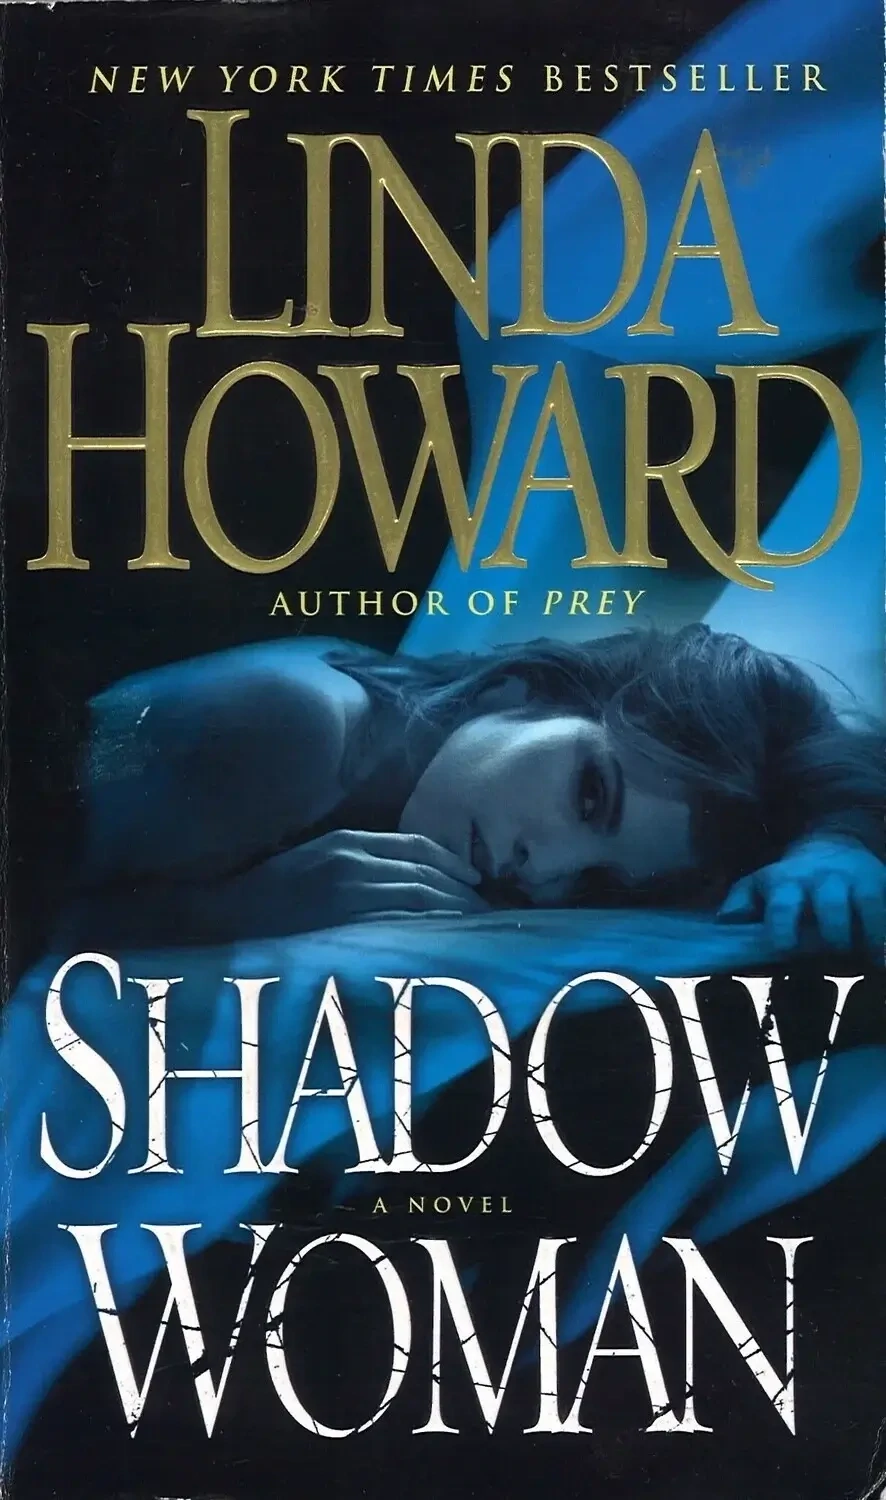 Shadow Woman by Linda Howard